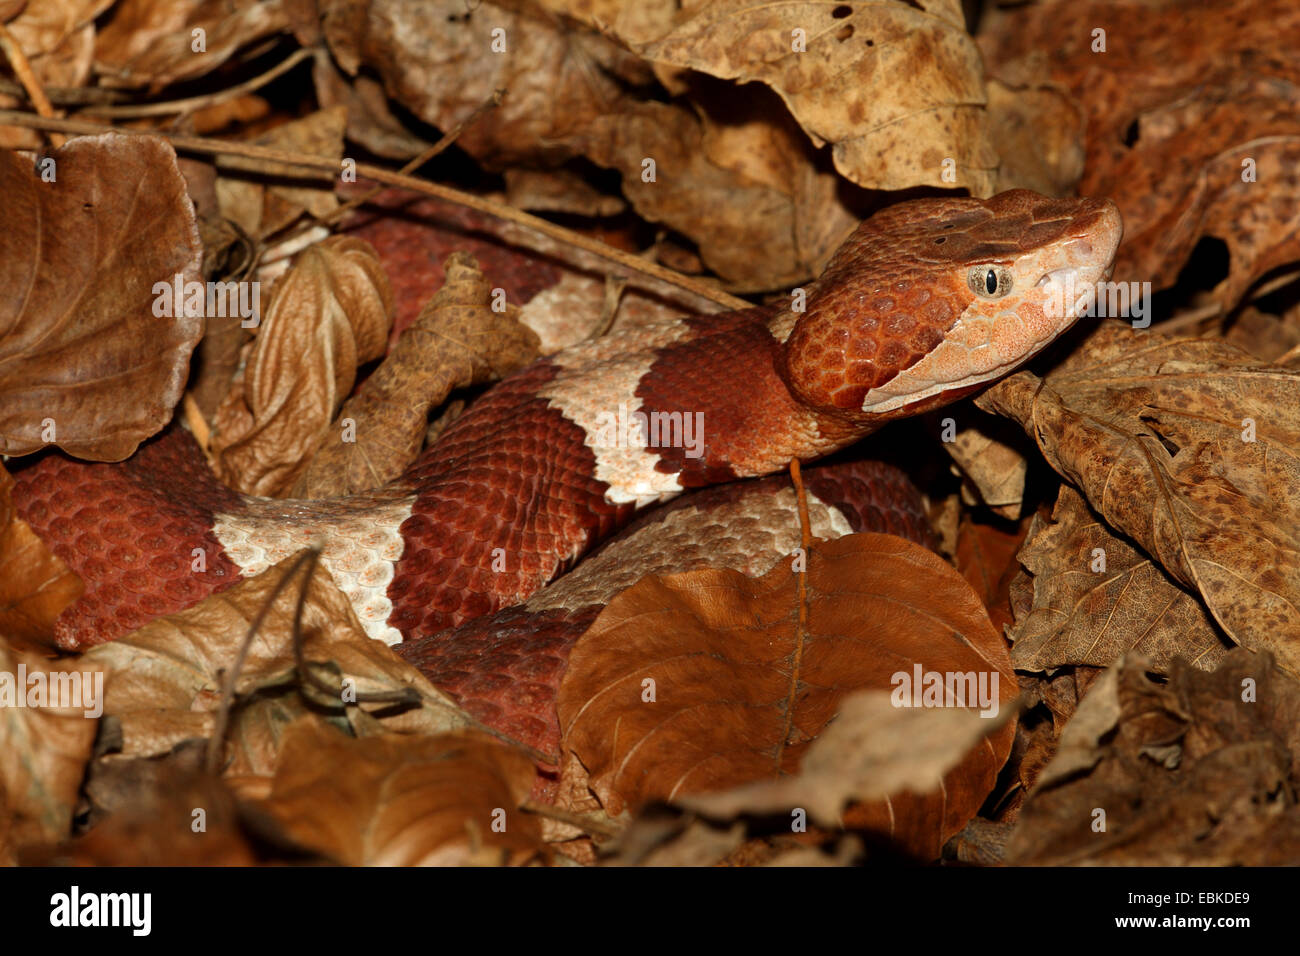 copperhead (Agkistrodon contortrix), creeping through dry foliage Stock Photo